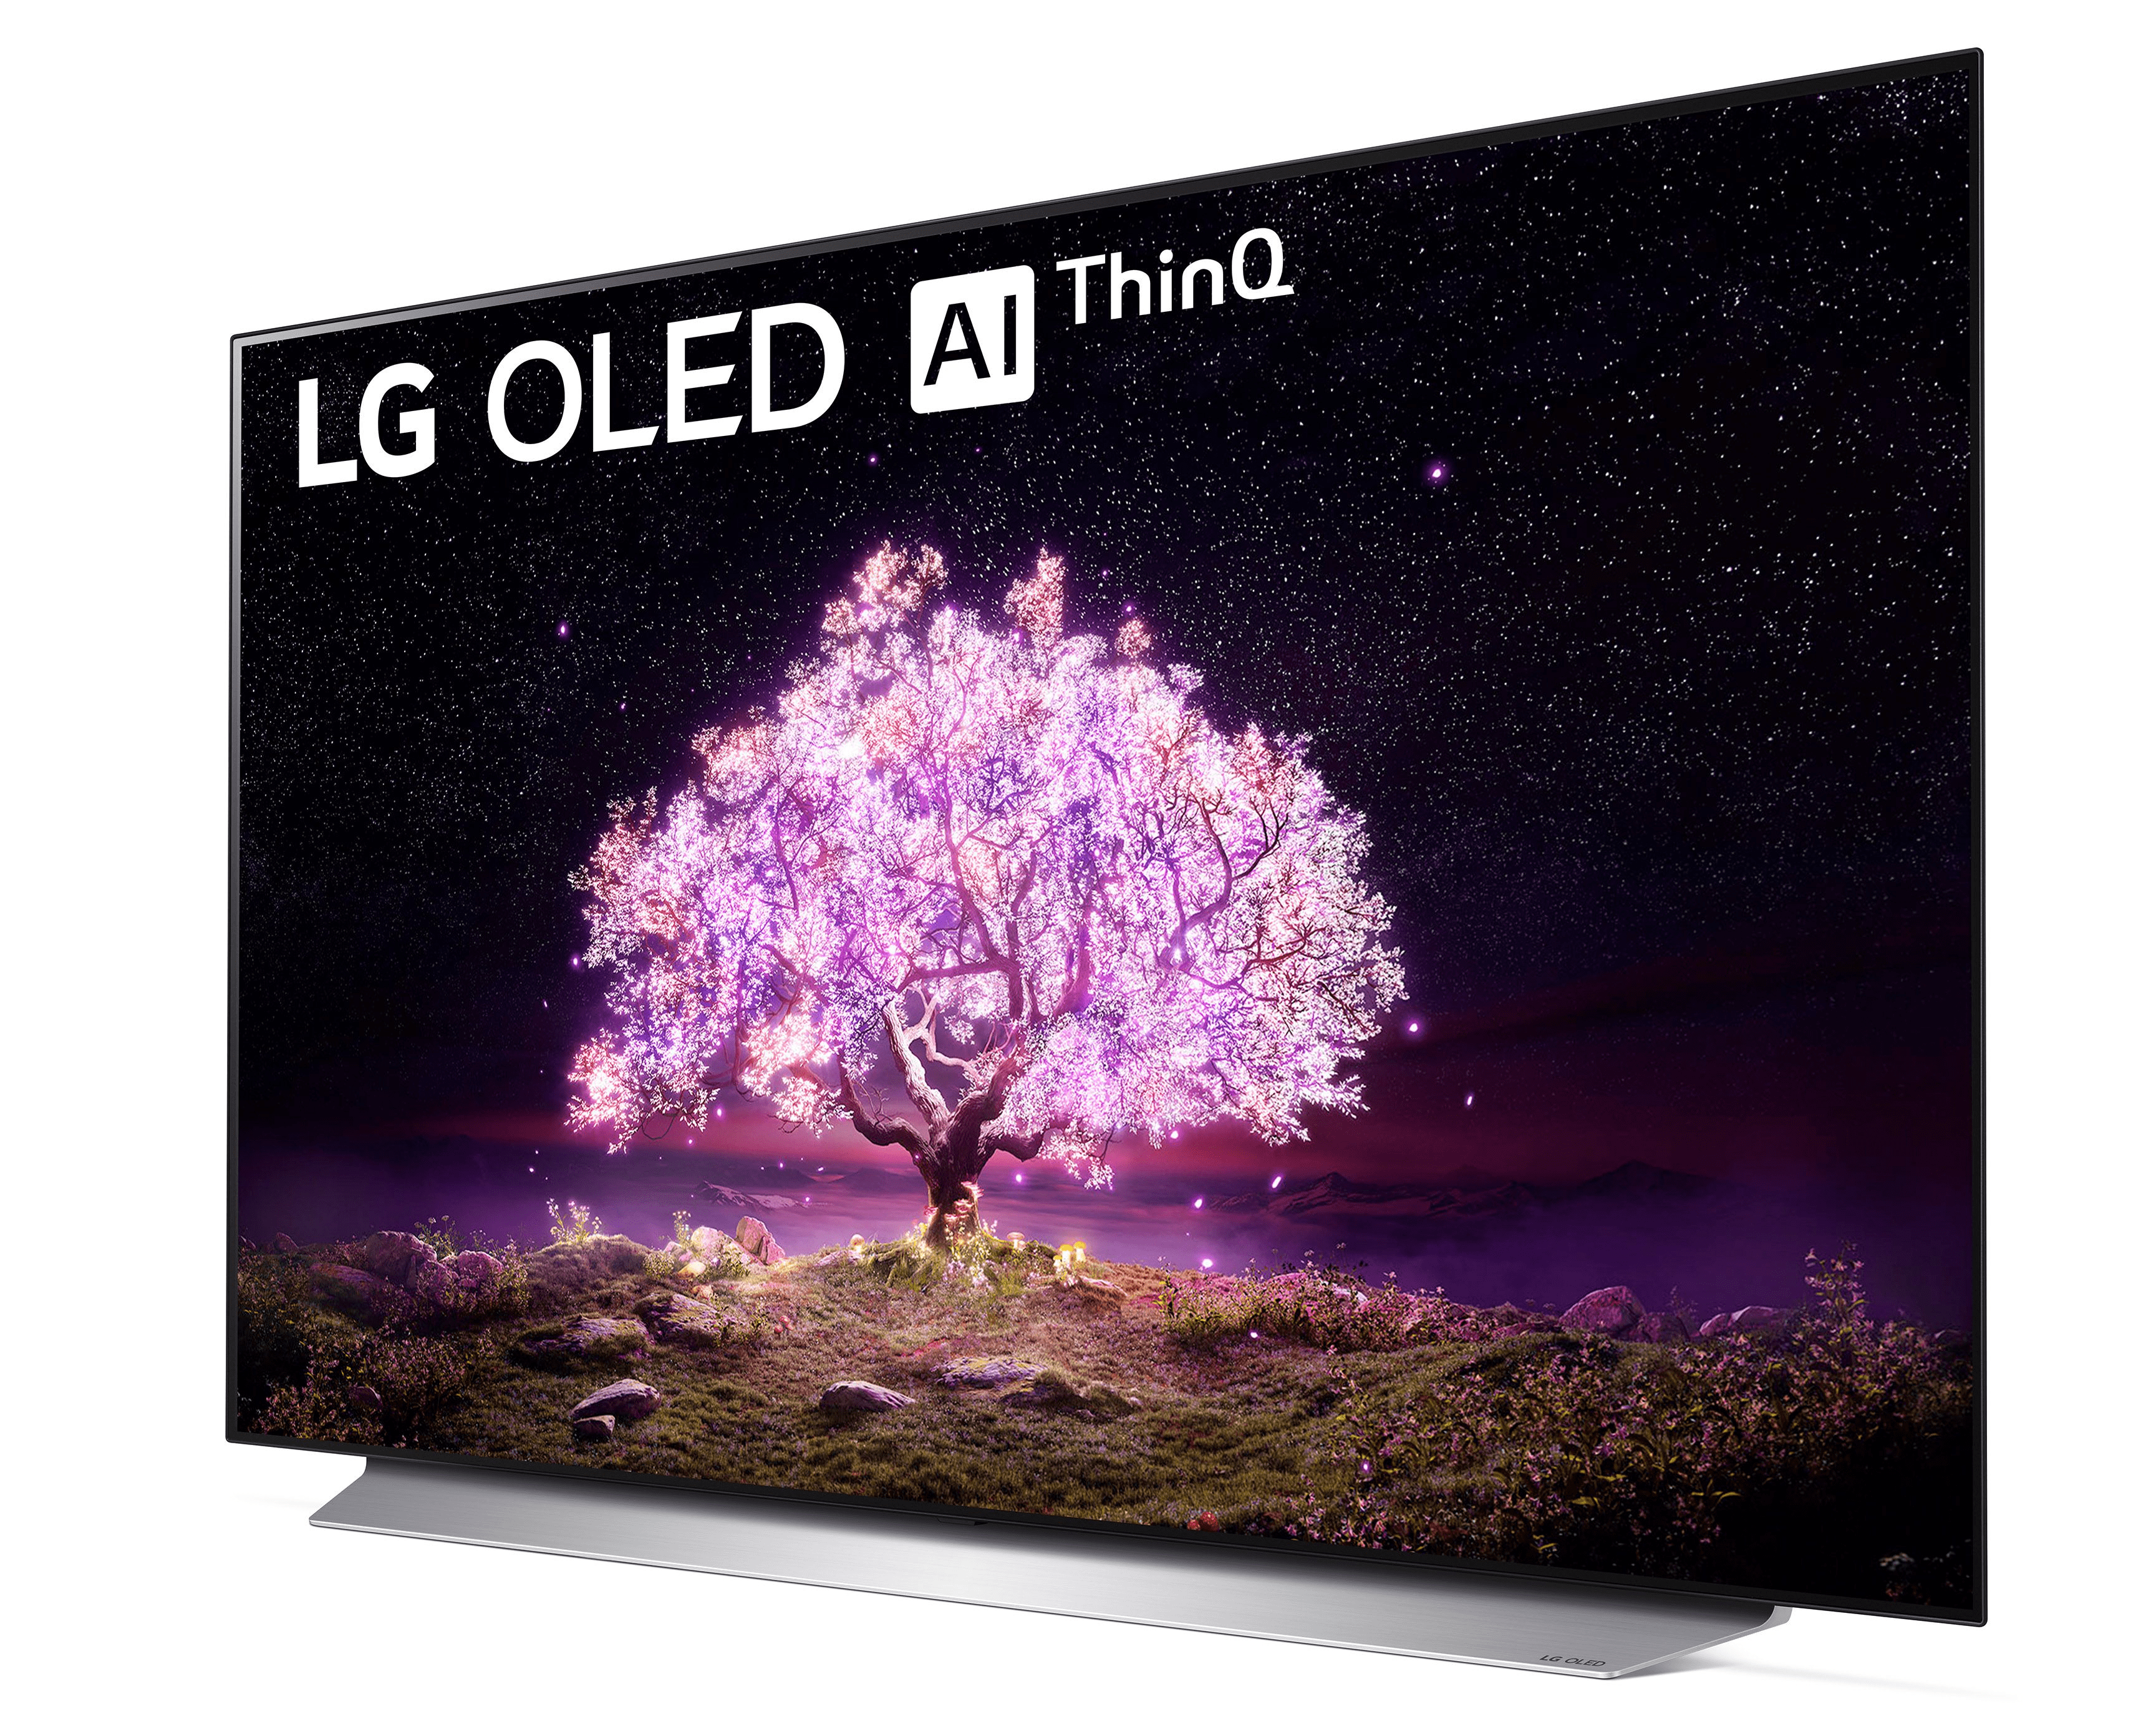 LG OLED C1 telewizor dla gracza